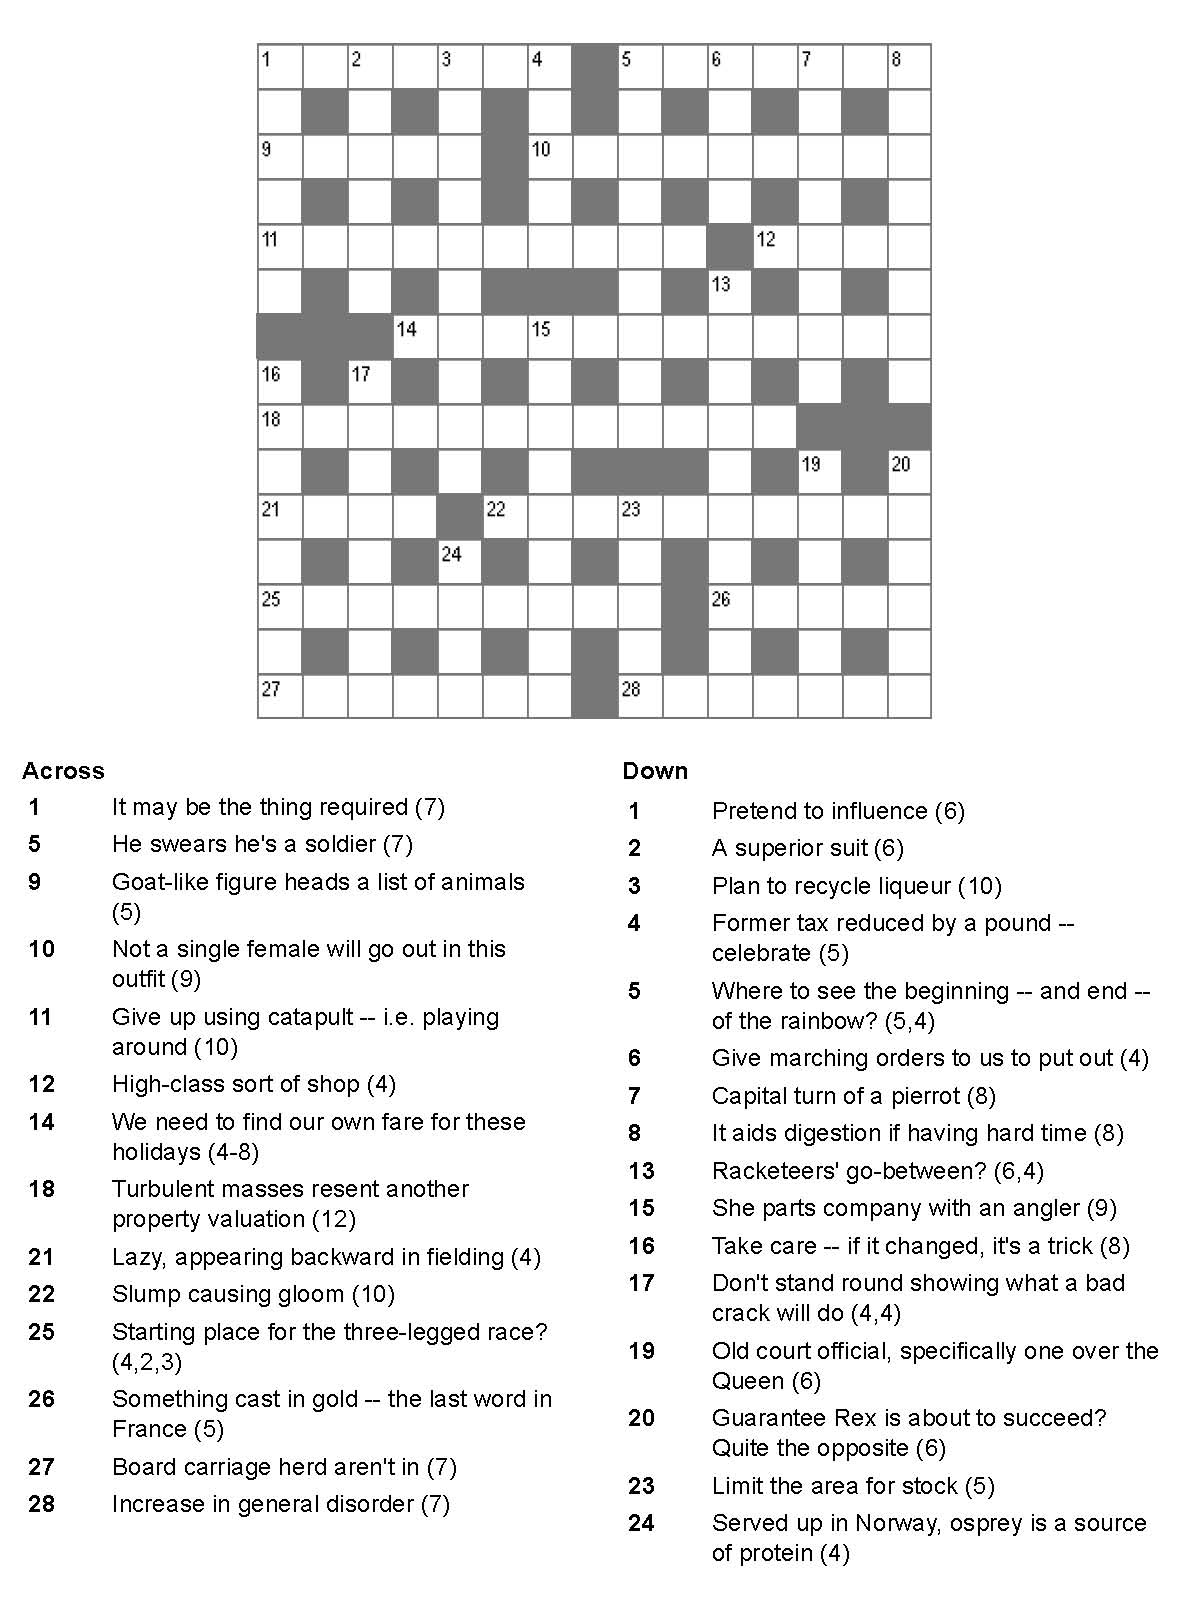 Summer Crossword Puzzle Free Printable